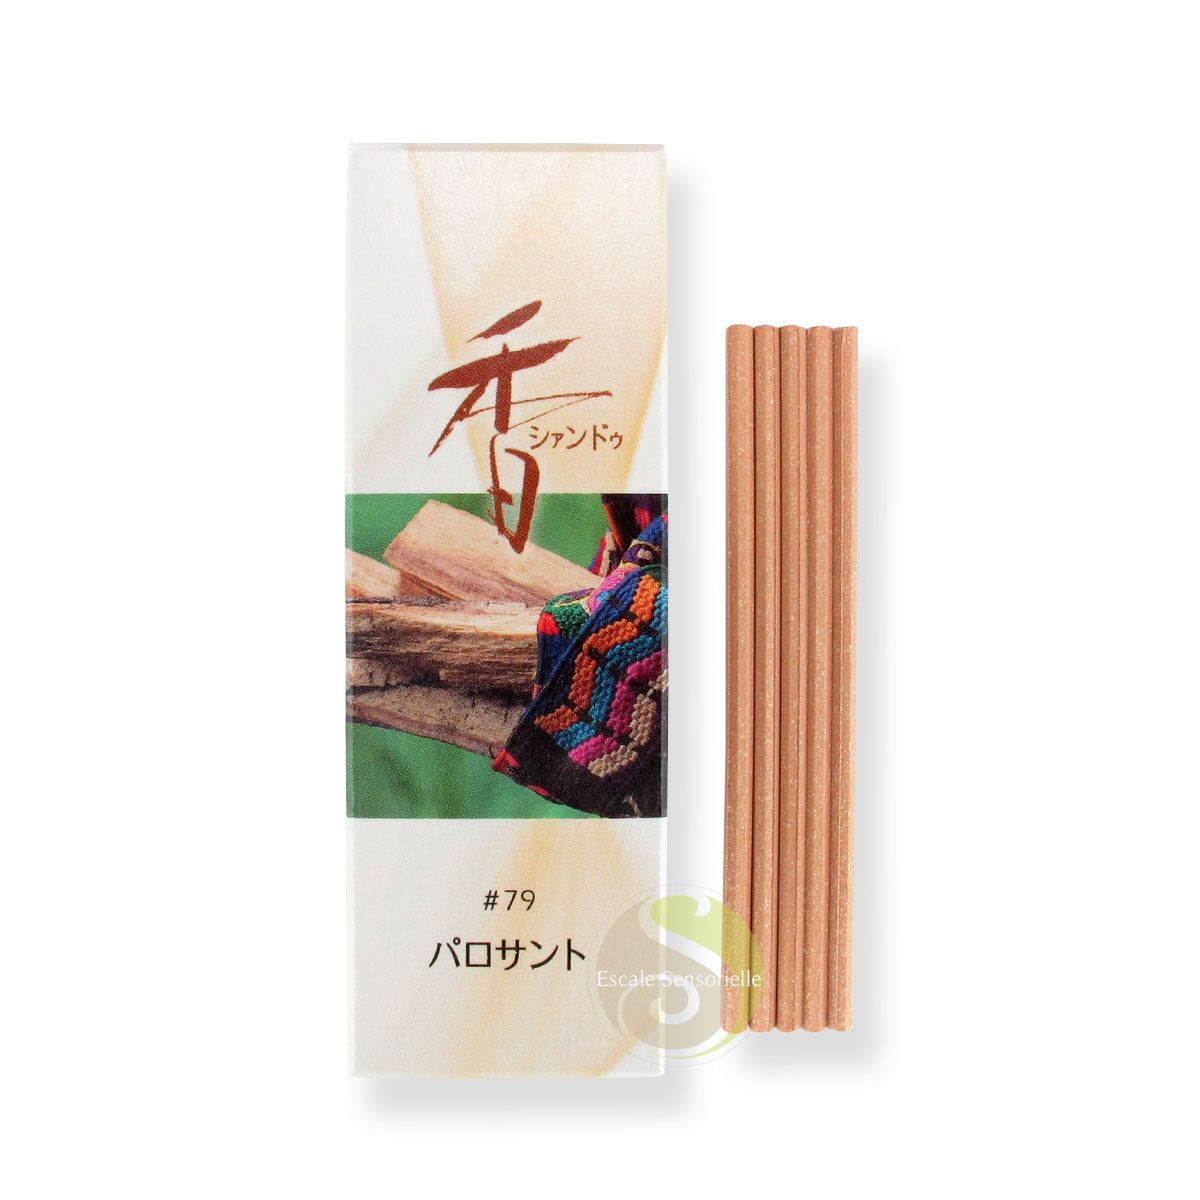 Palo santo Shoyeido encens premium japonais parfum naturel